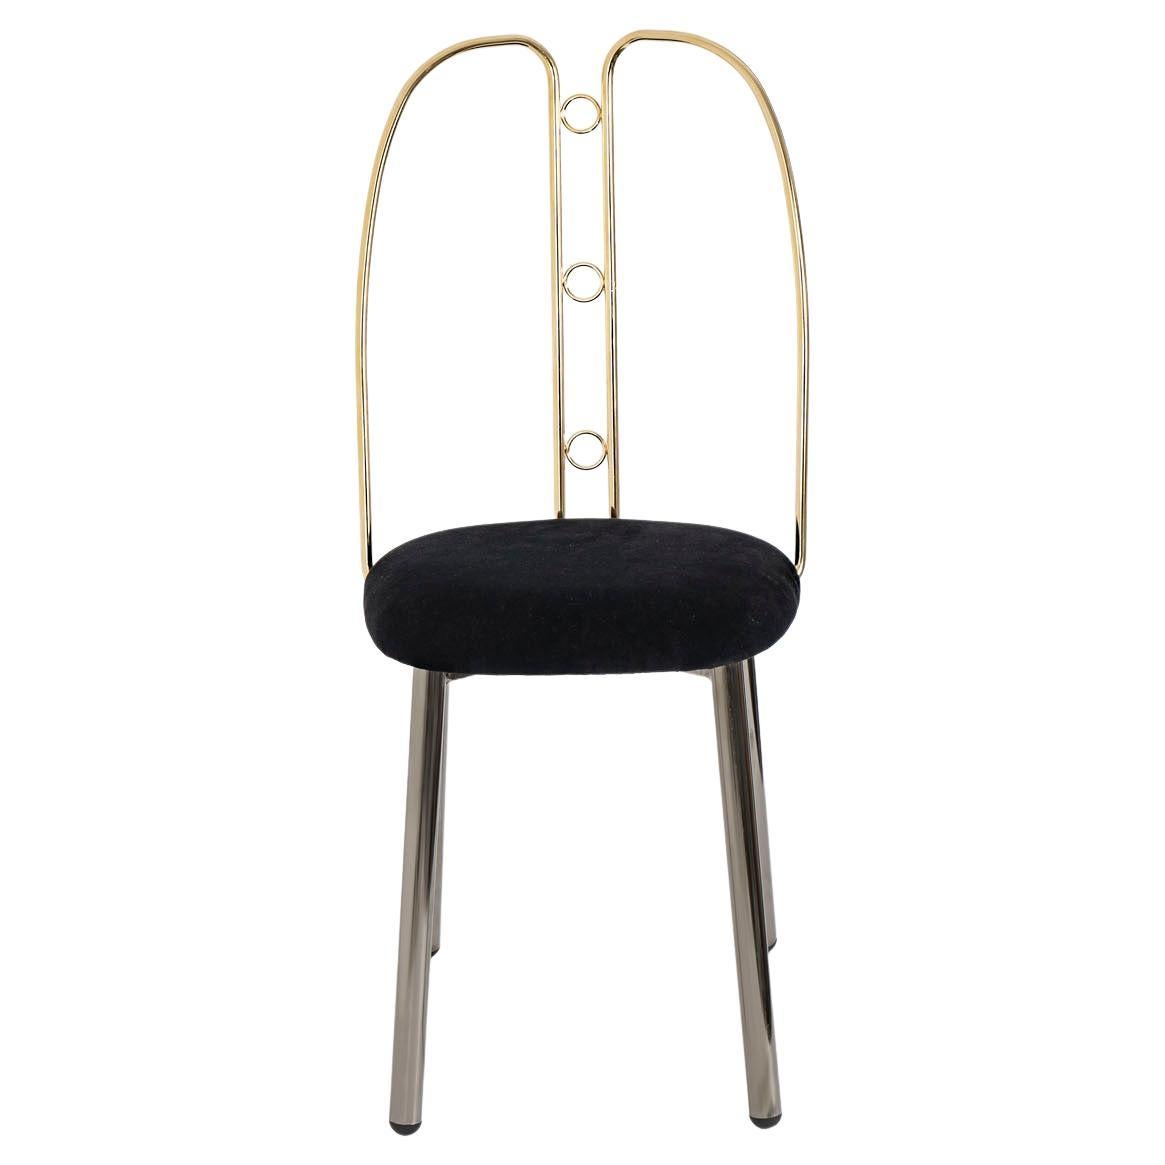 Nollie Gold romantic chair design Made in Italy by edizioni Enrico Girotti